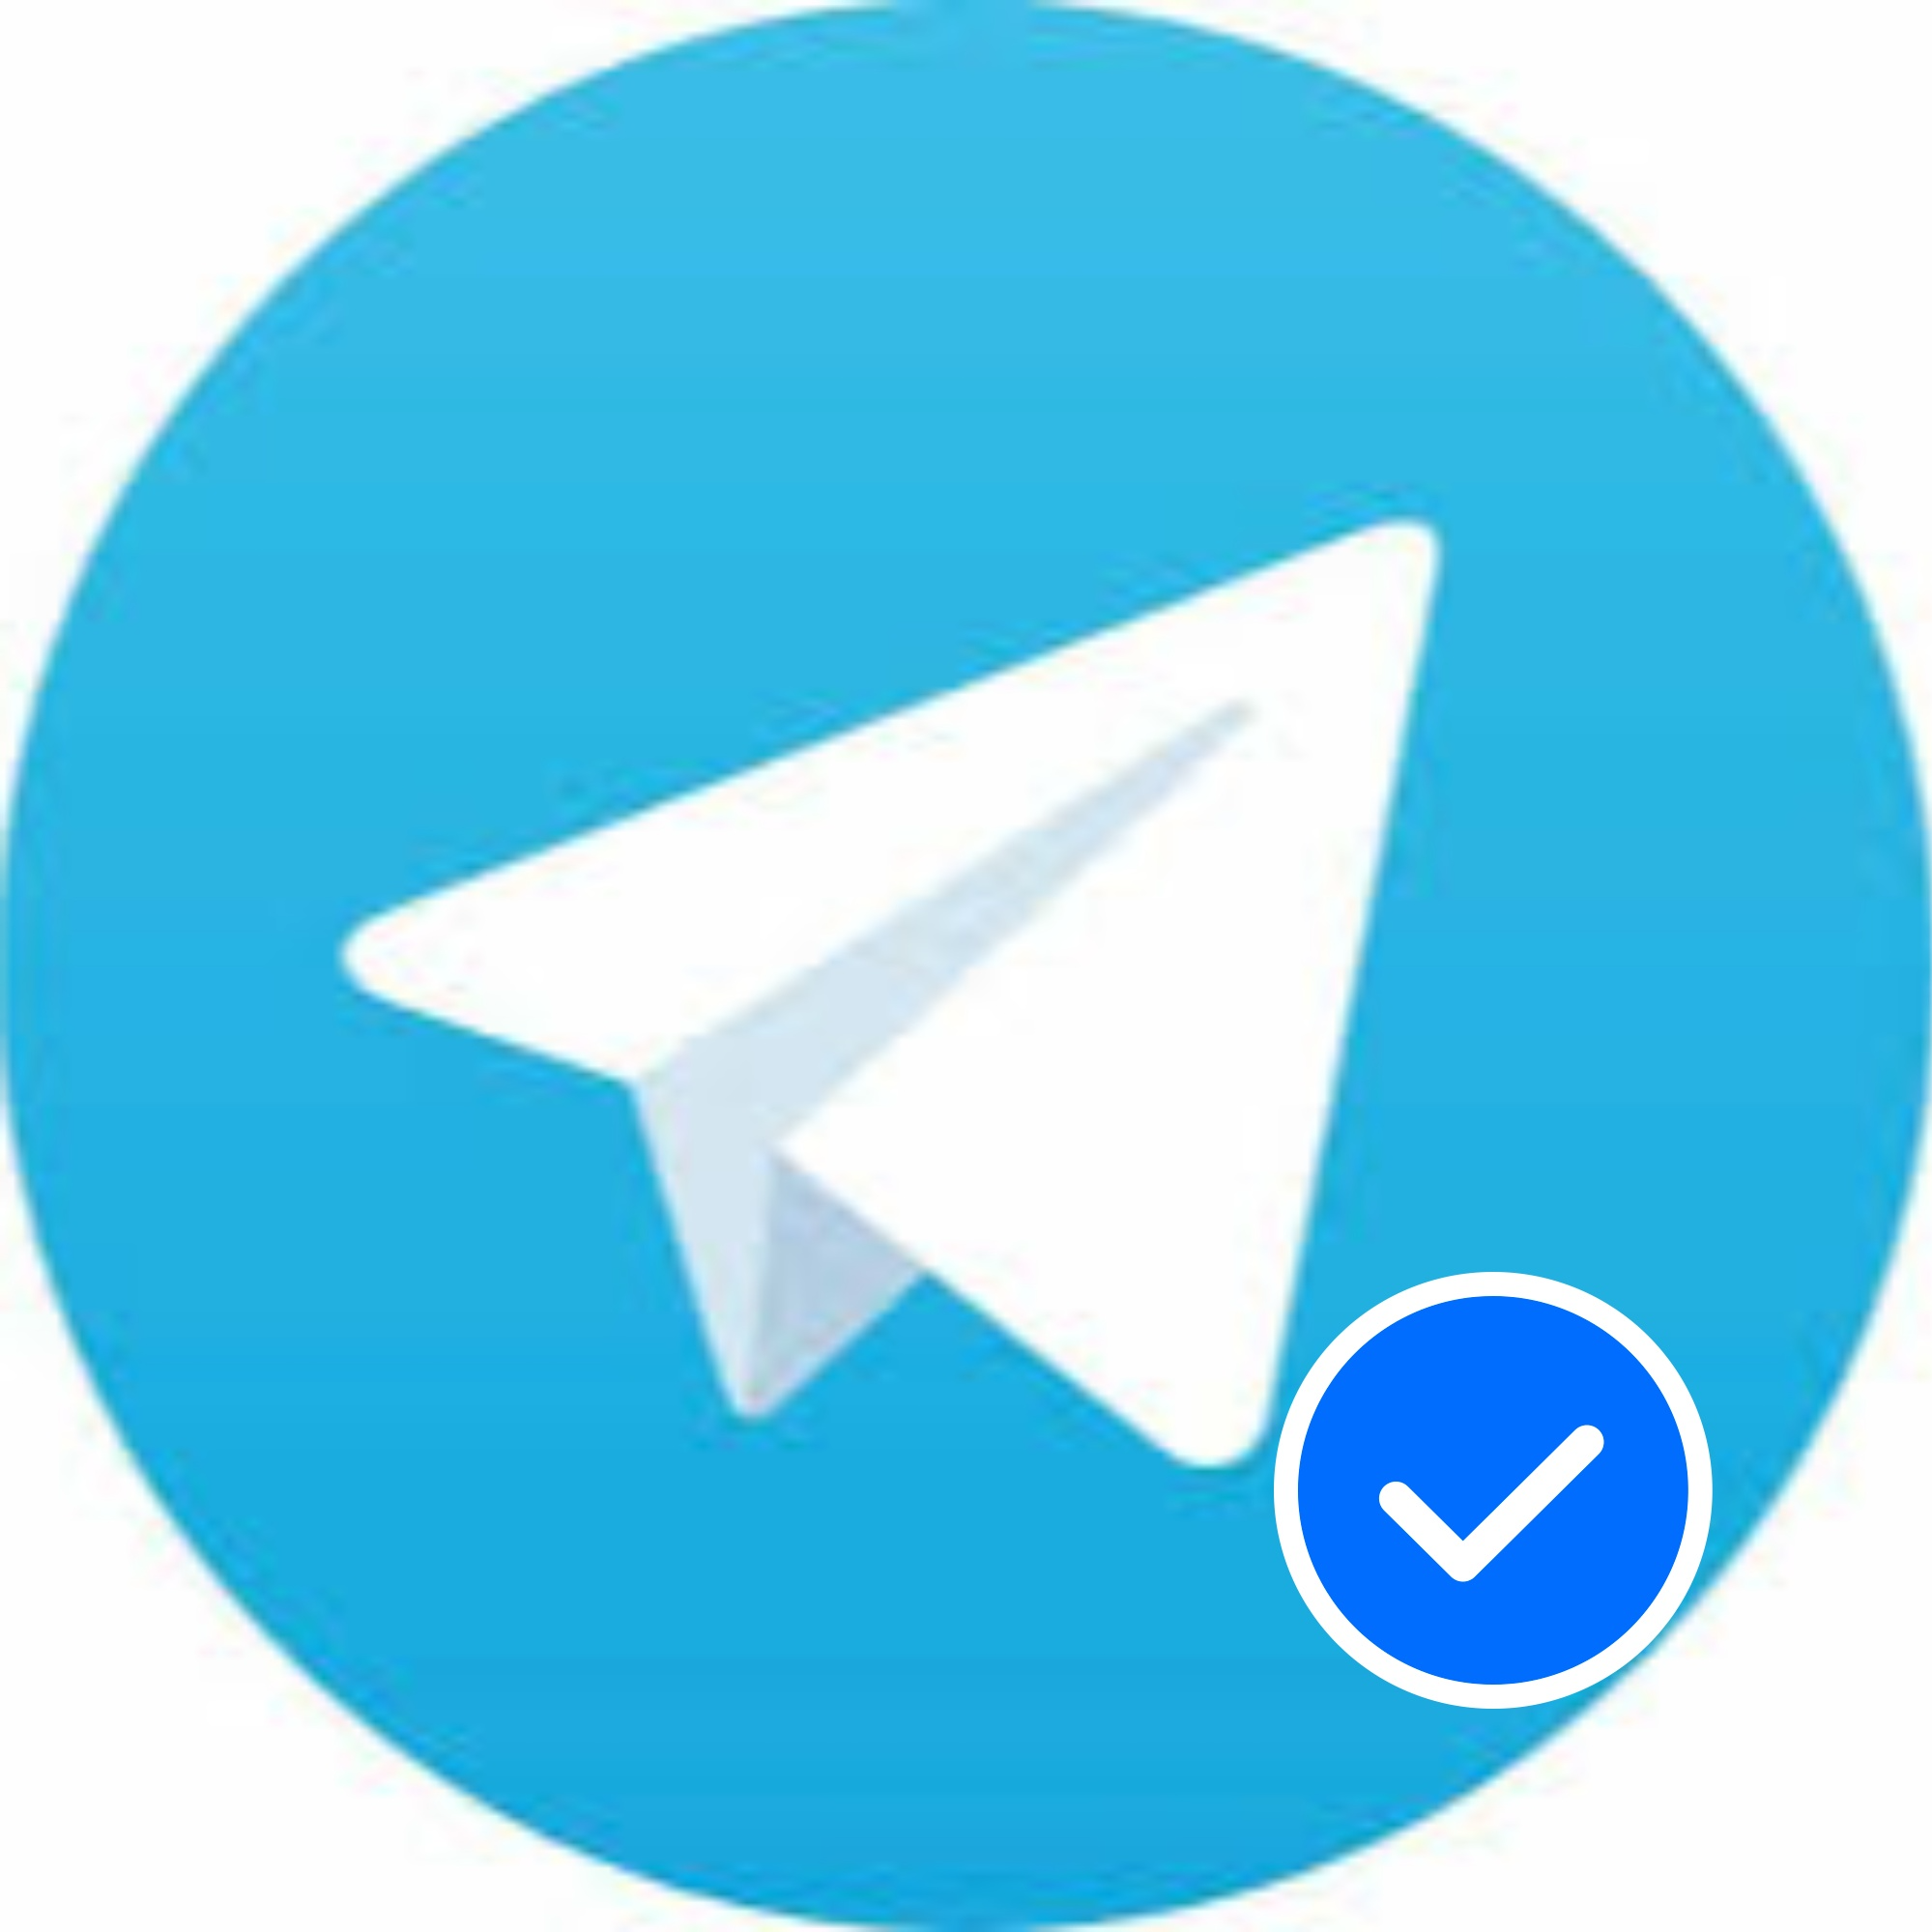 BUFF TƯƠNG TÁC TELEGRAM CHẤT LƯỢNG